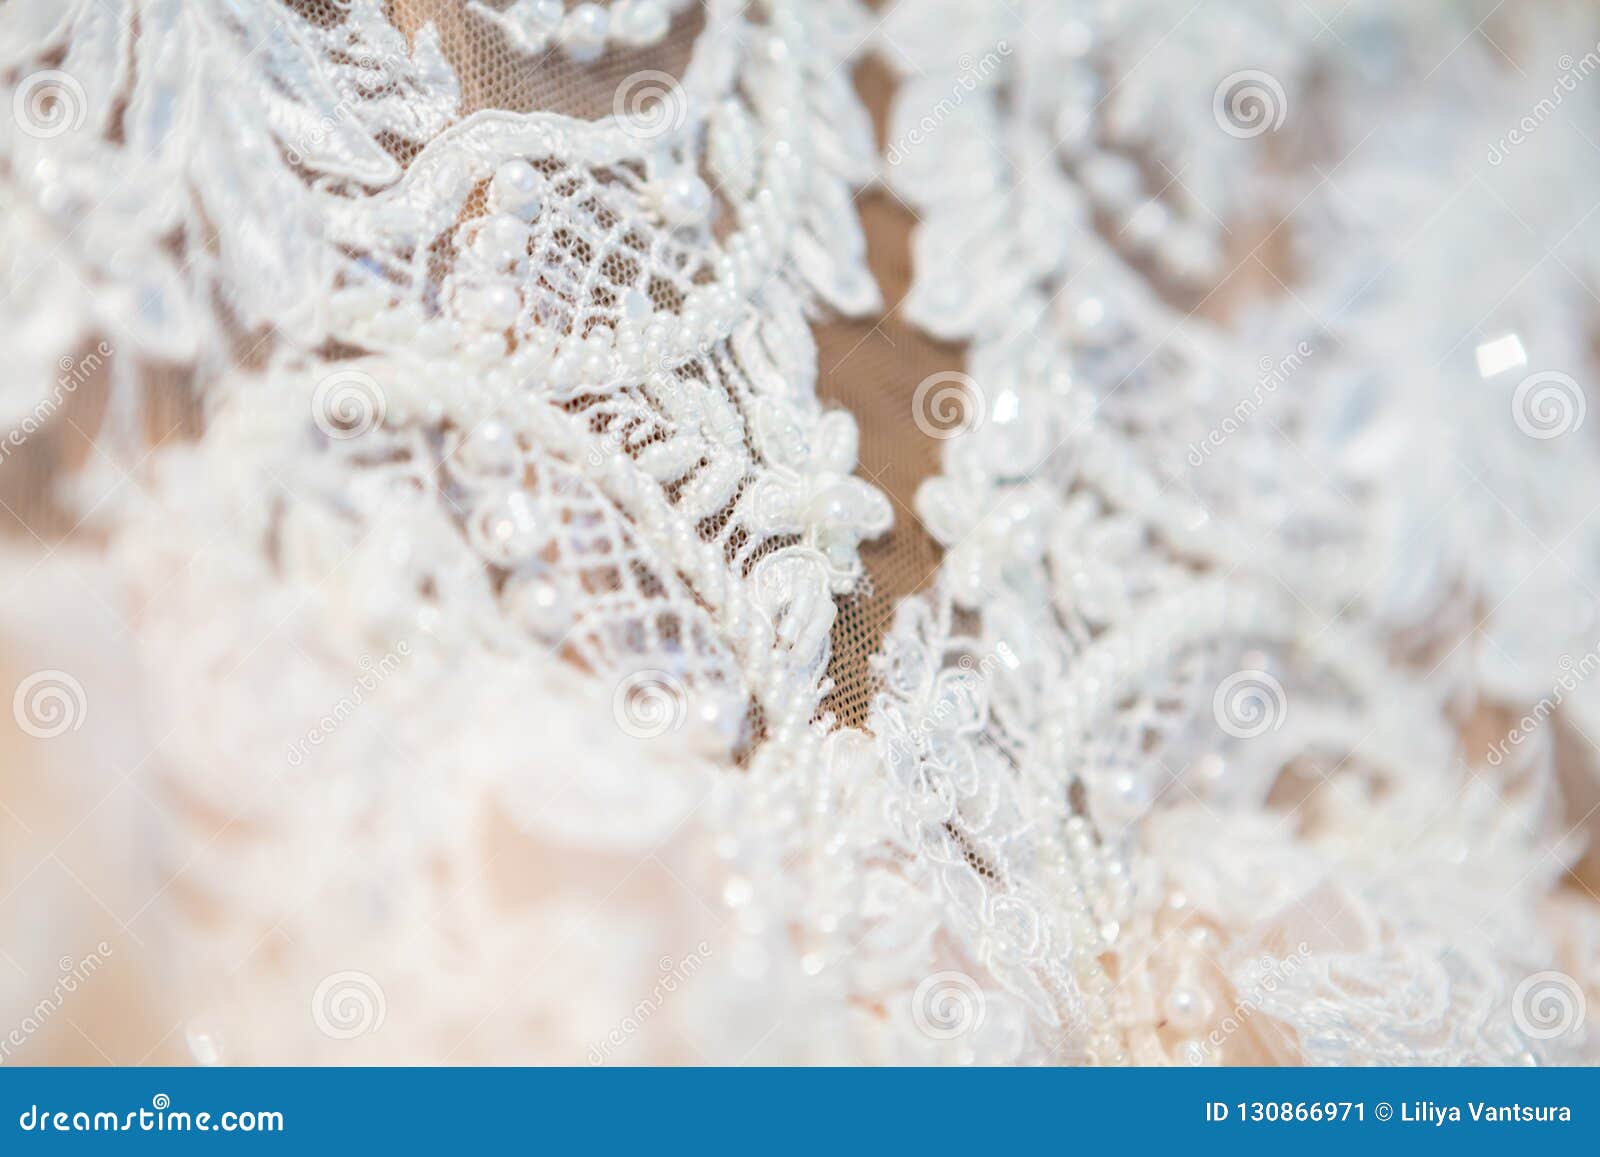 Beautiful Wedding Dress Close-up Details of Wedding Lace Stock Image ...